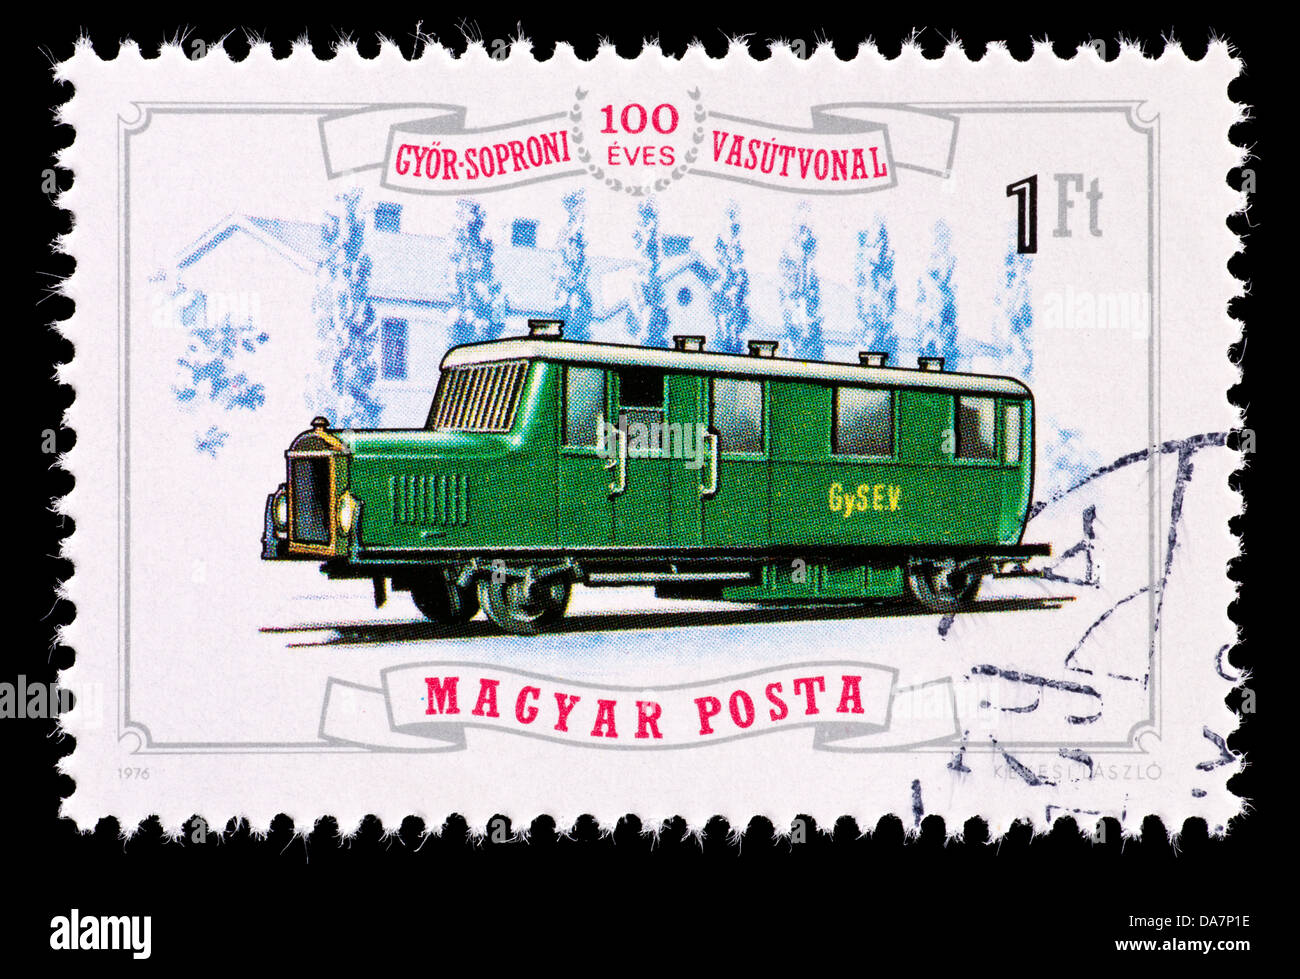 Postage stamp from Hungary depicting a 1925 Railbus, Fertoszentmiklos Station, Gyor-Sopron railroad station centennial. Stock Photo